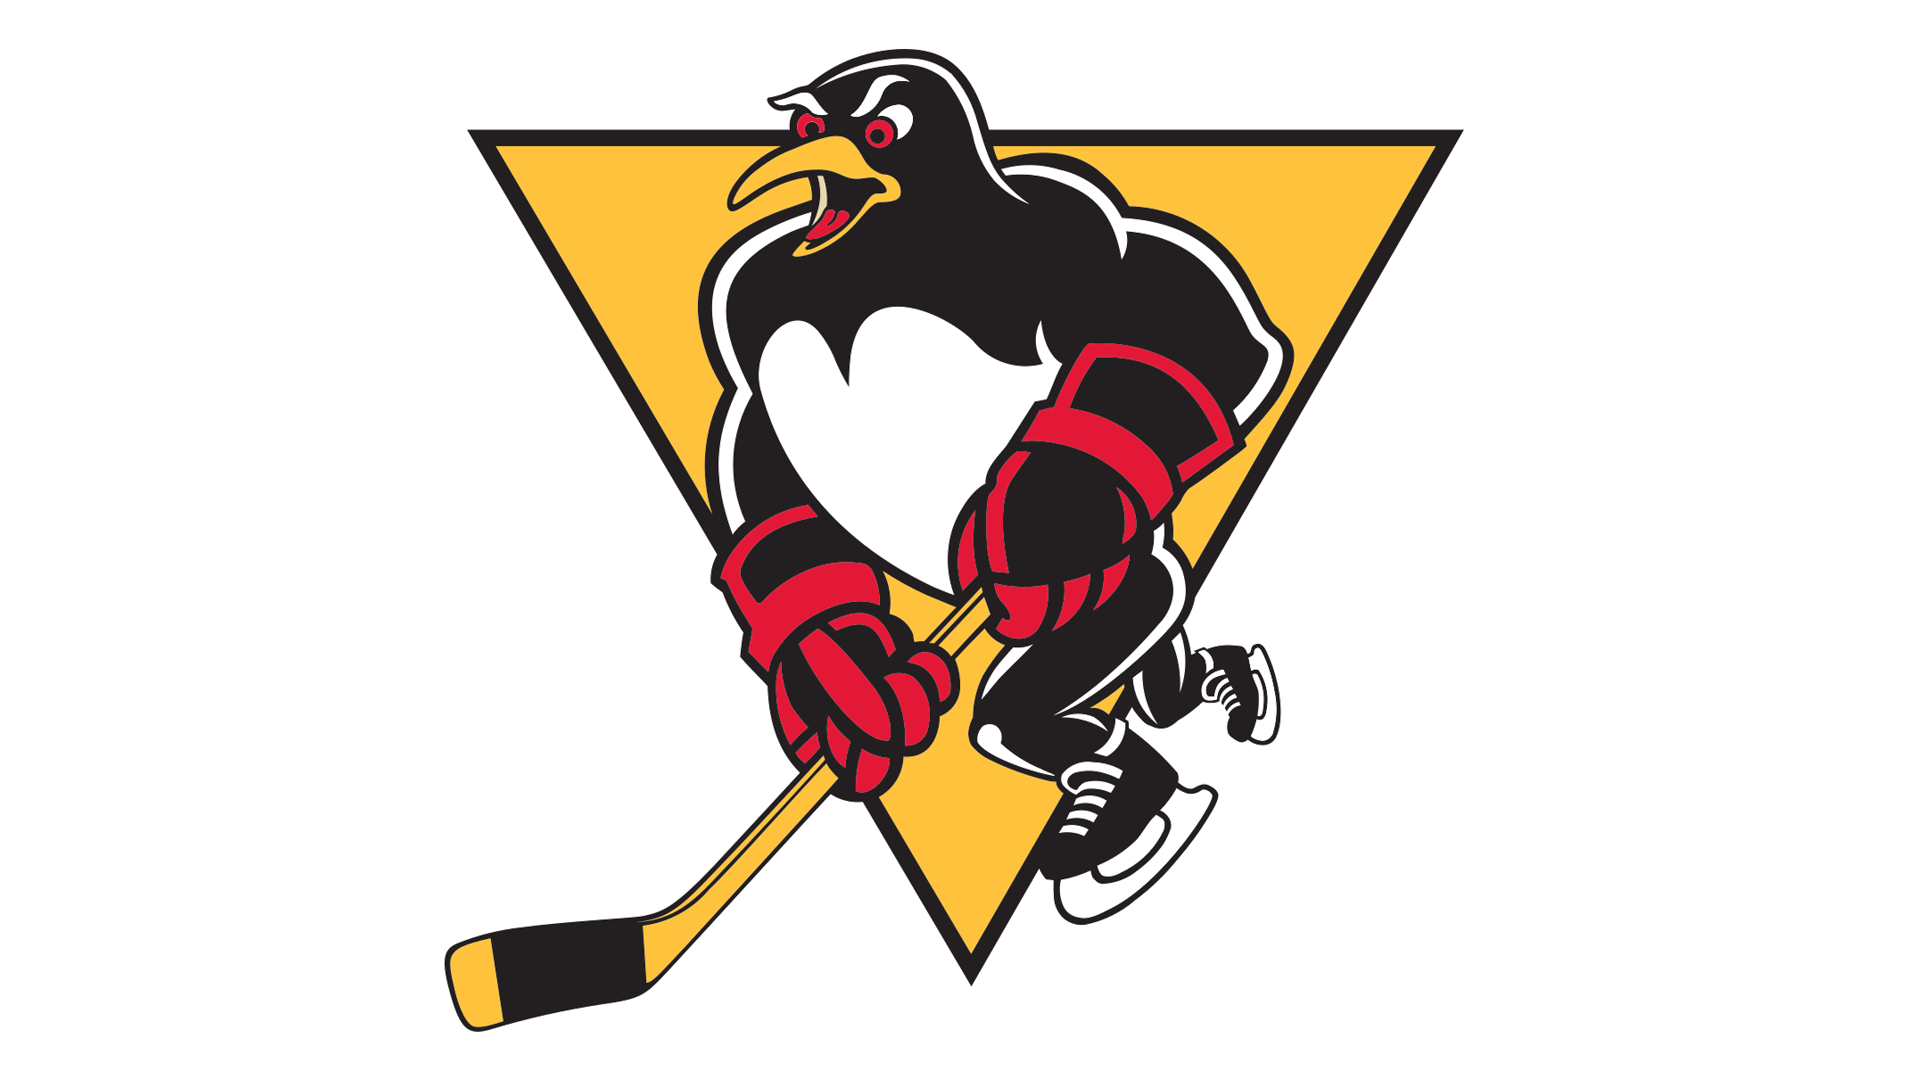 Официальные сайты хоккейных команд. Хоккейные команды НХЛ. Логотипы хоккейных команд НХЛ. НХЛ Питтсбург Пингвинз. Хоккейная команда NHL логотипы.